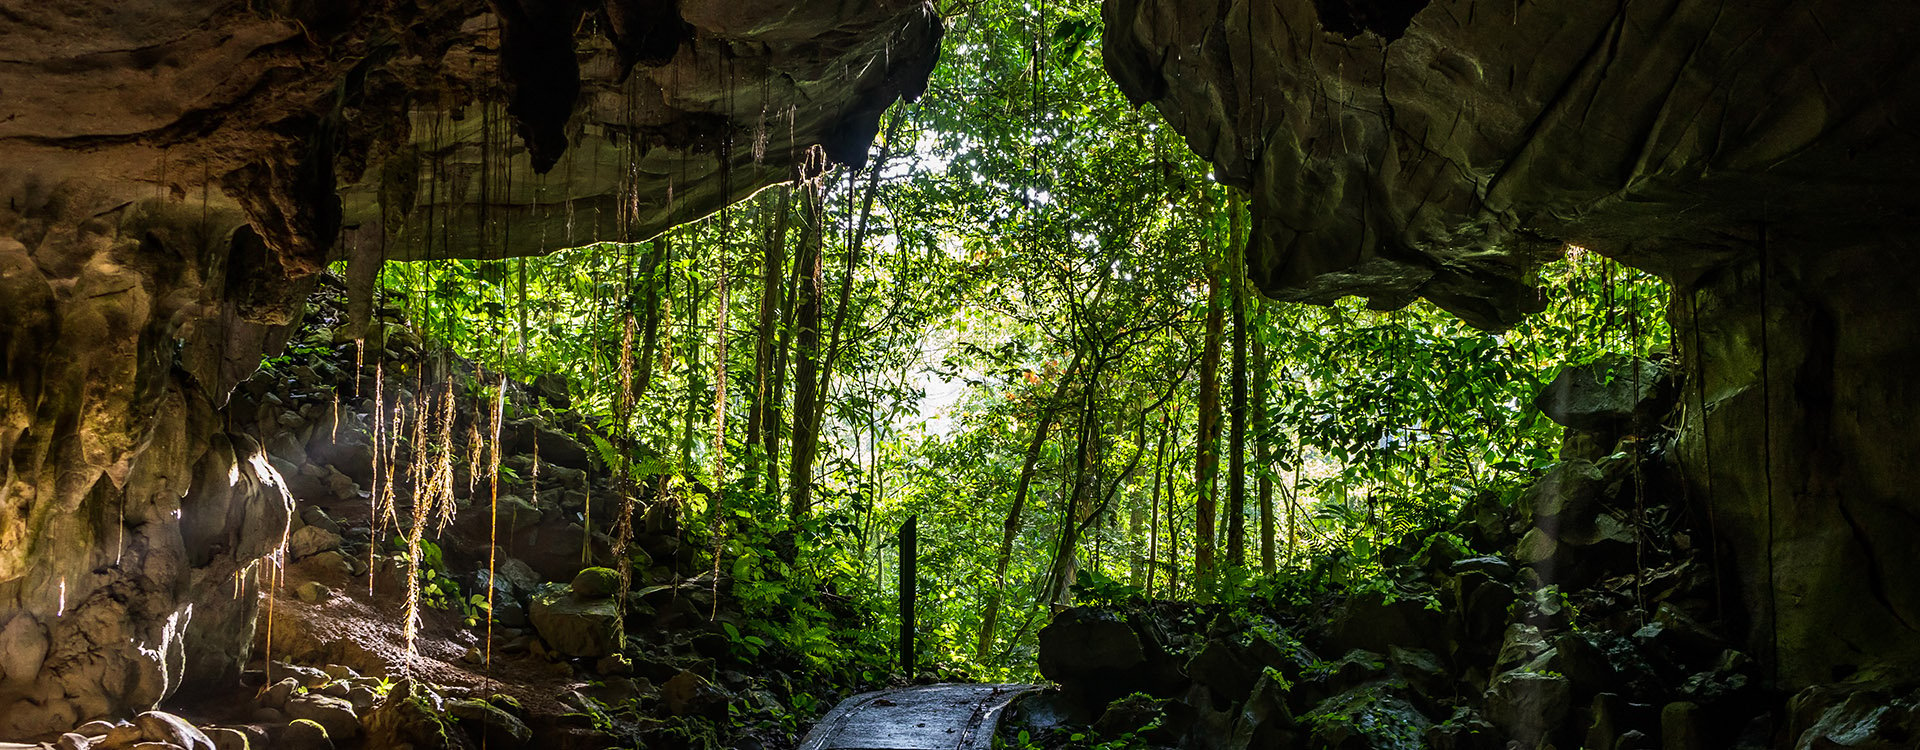 Diamond shaped cave entrance in Mulu National Park, Borneo, Malaysia